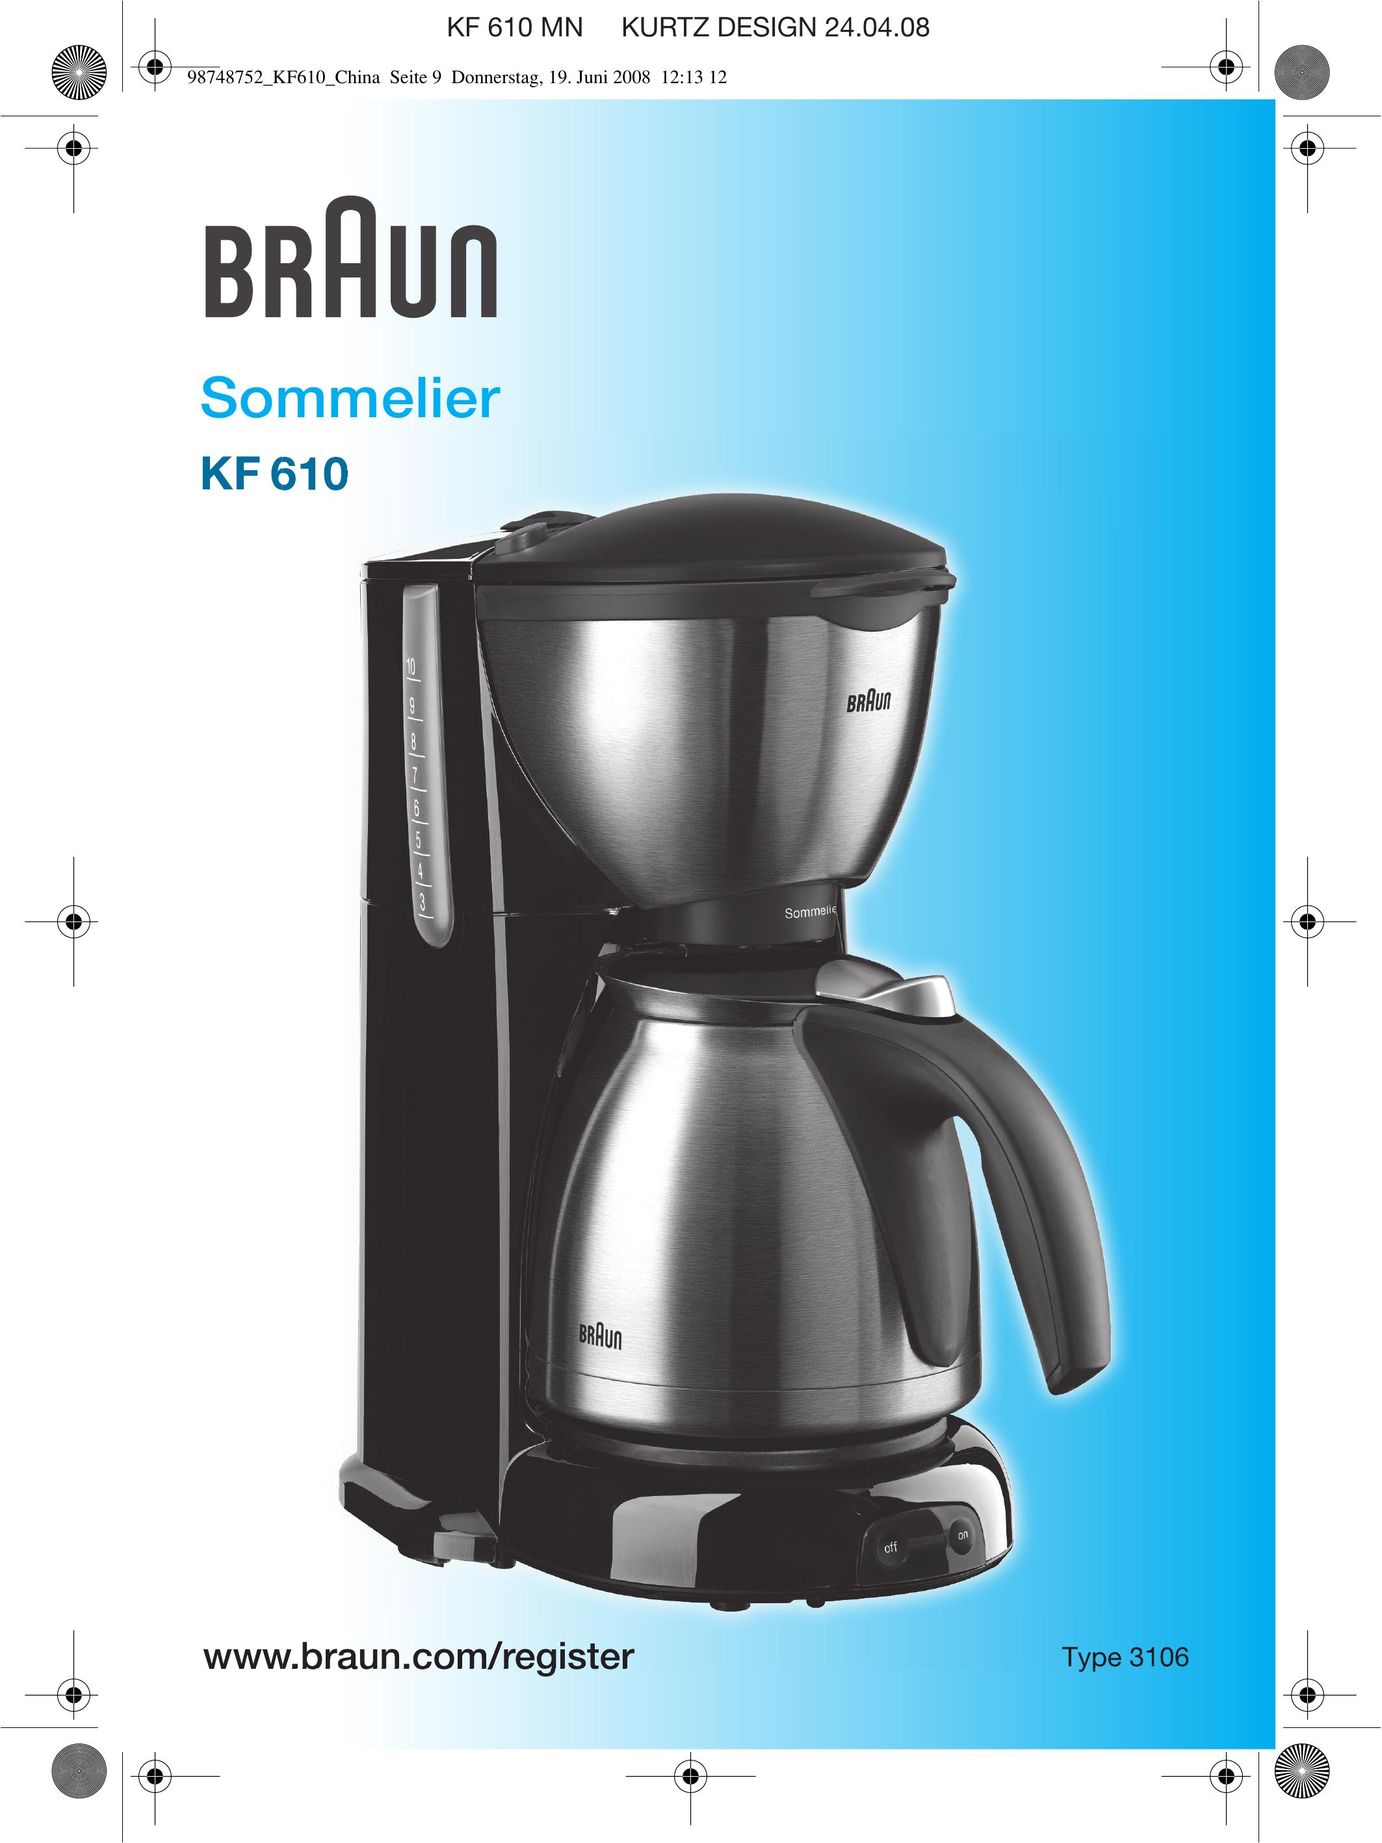 Braun KF 610 Coffeemaker User Manual